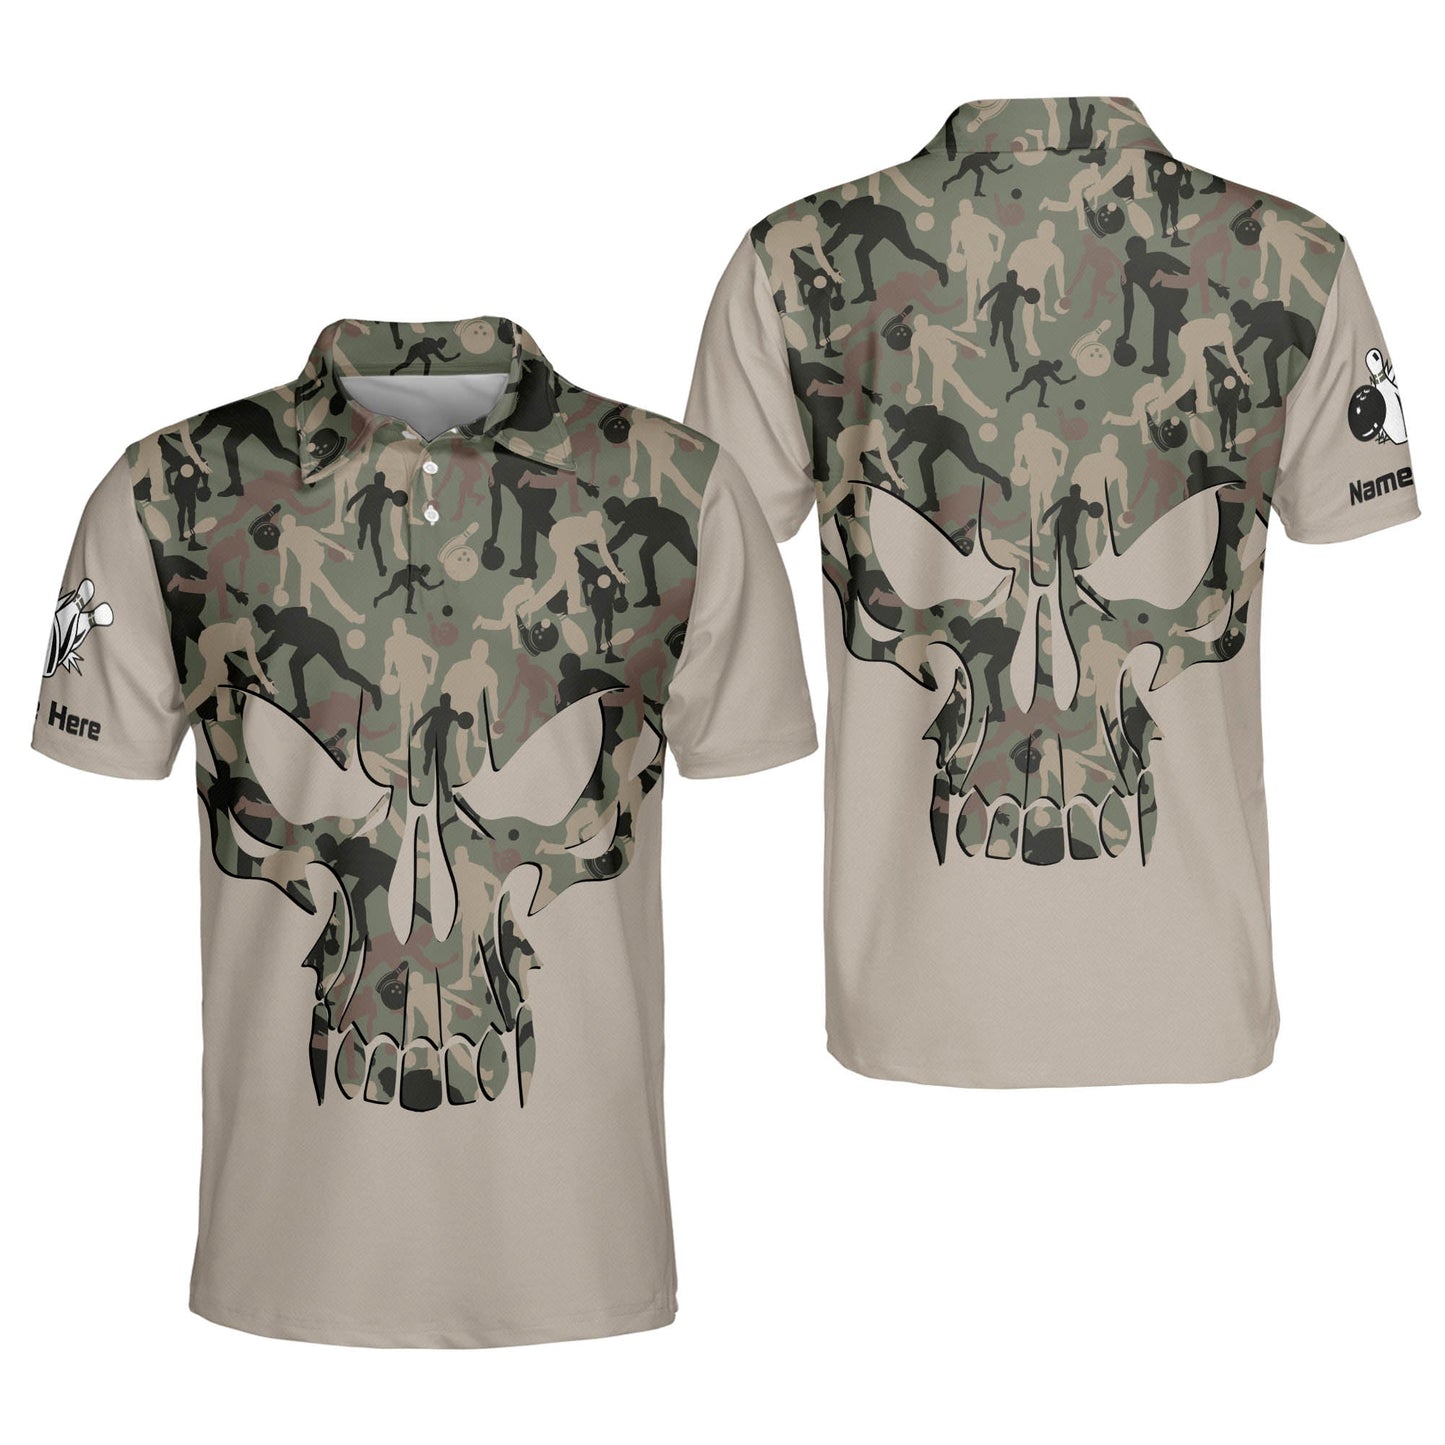 Custom Bowling Shirts For Men - Funny Bowling Shirts - Camo Designer Bowling Shirt Short Sleeve For Men - Men's Custom Skull Bowling Shirts With Name BM0120